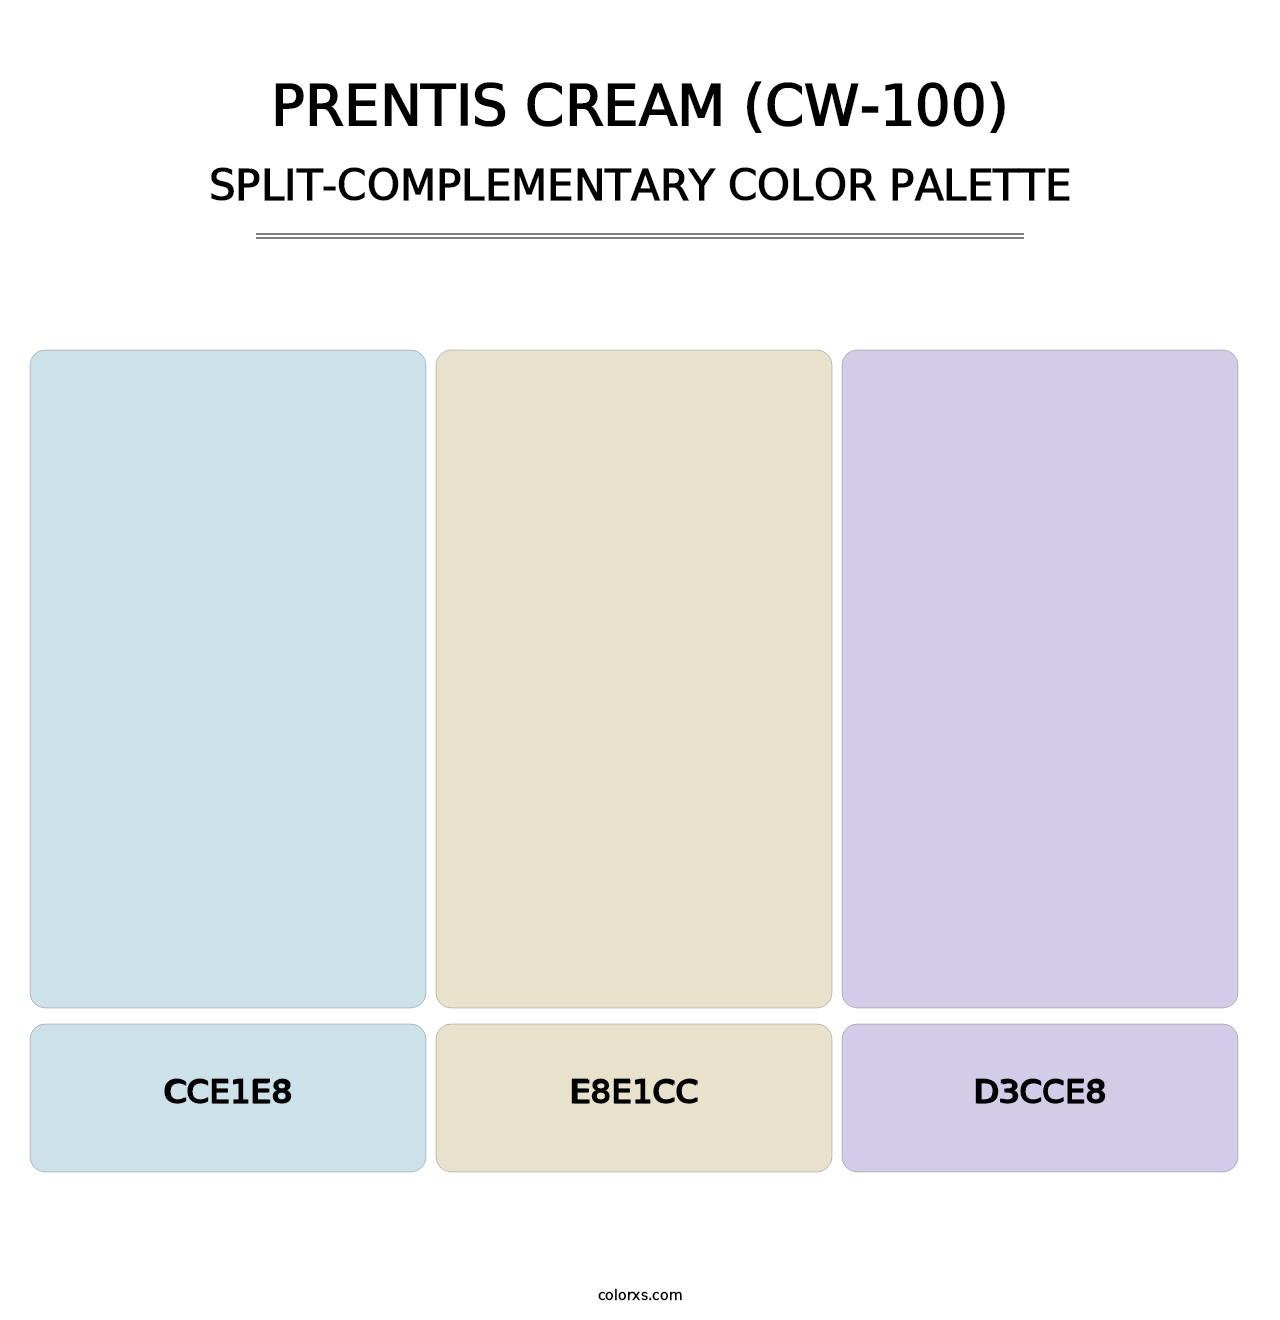 Prentis Cream (CW-100) - Split-Complementary Color Palette